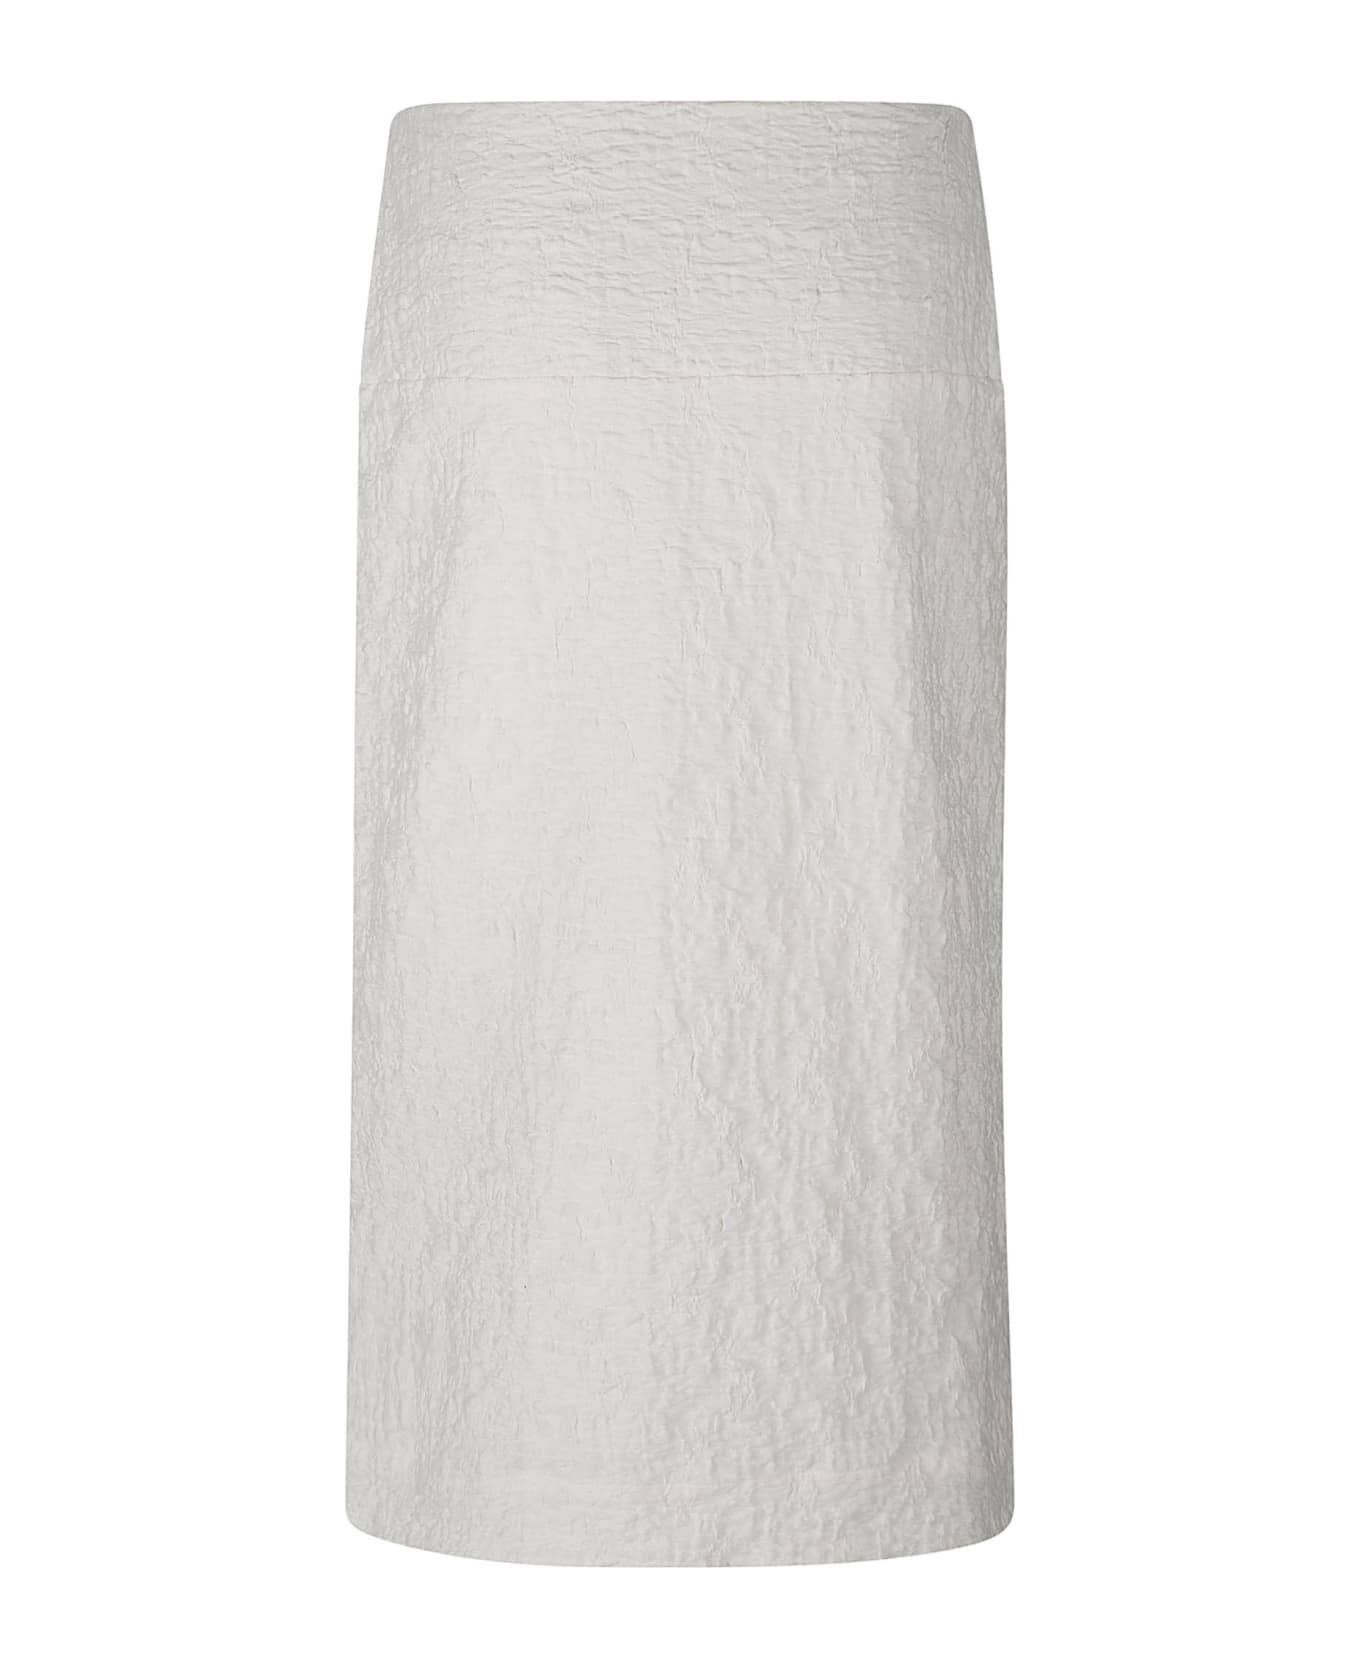 Jil Sander White Cotton Blend Skirt - Natural スカート